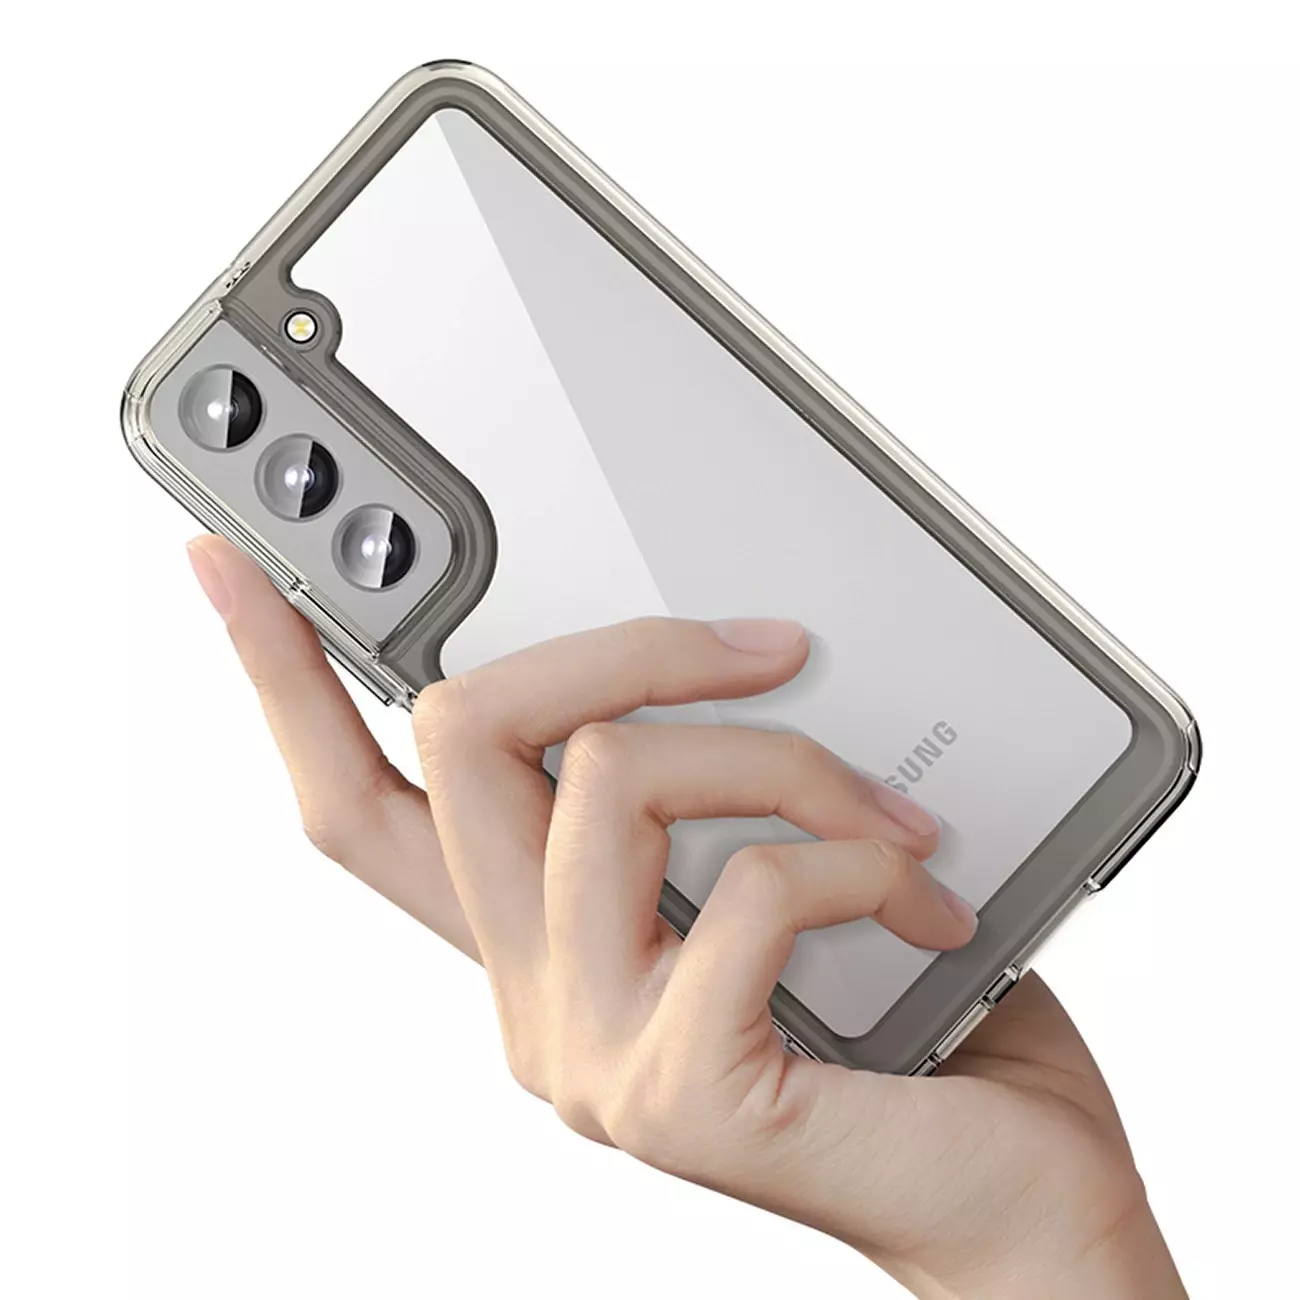 Bestand Smartphone / Tablet Magnet Halterung Silber